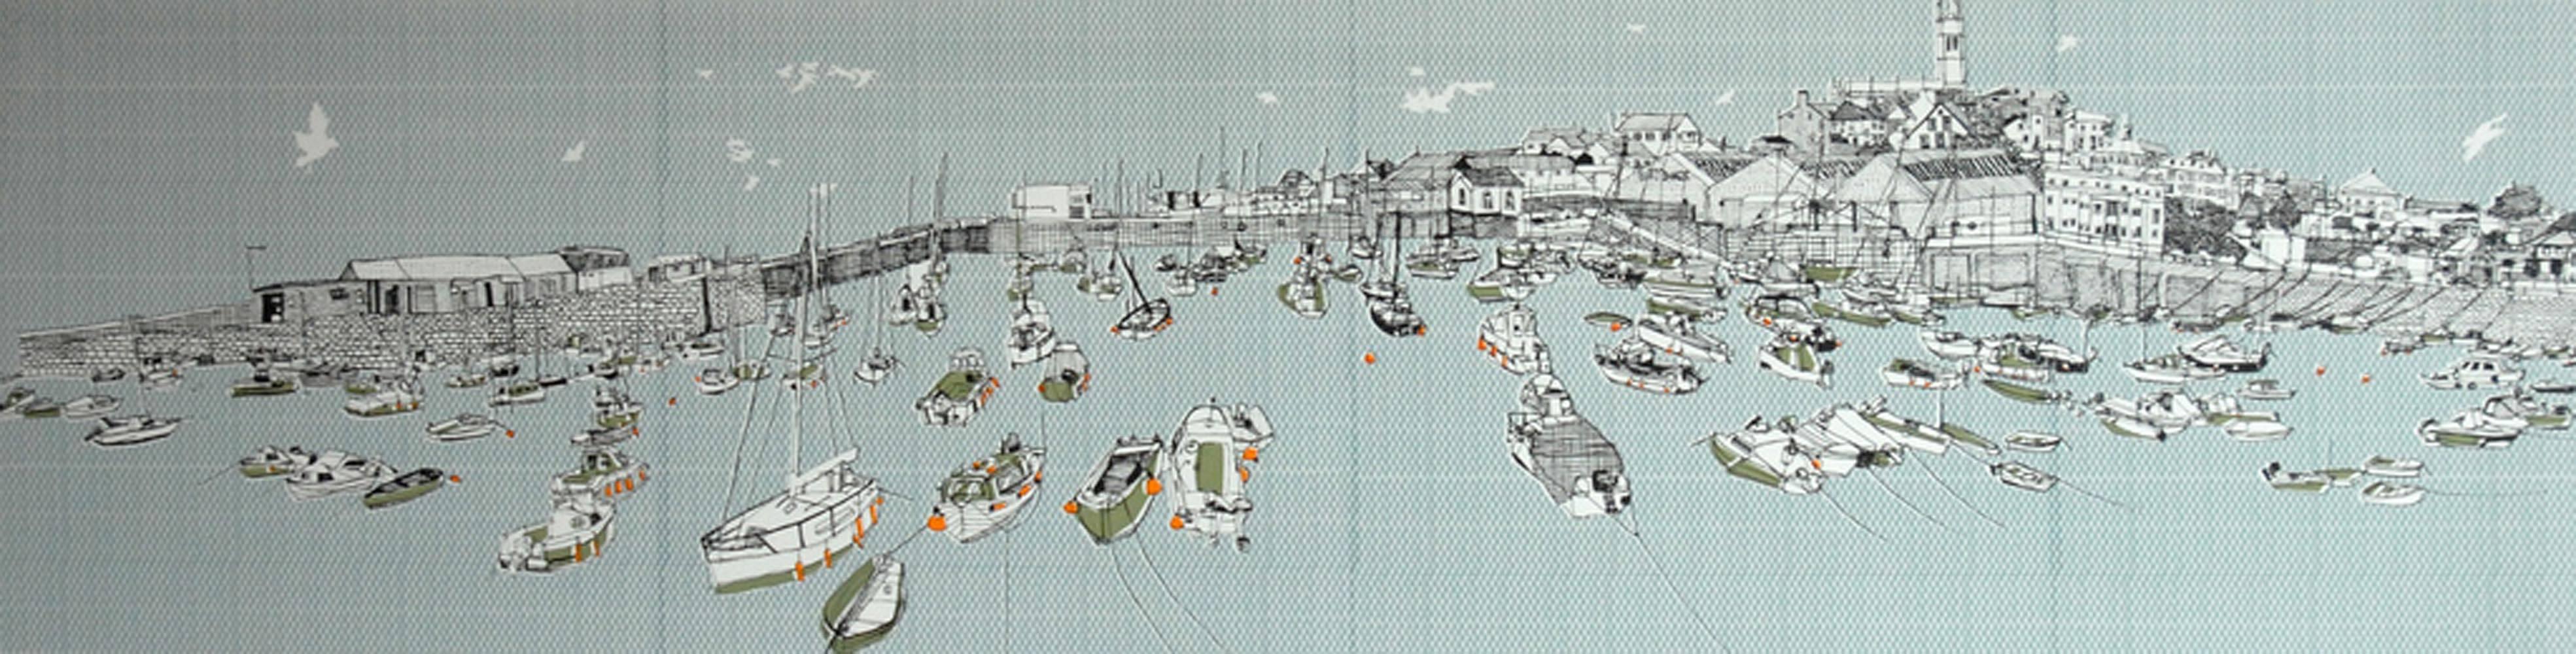 Clare Halifax Figurative Print - Penzance Harbour